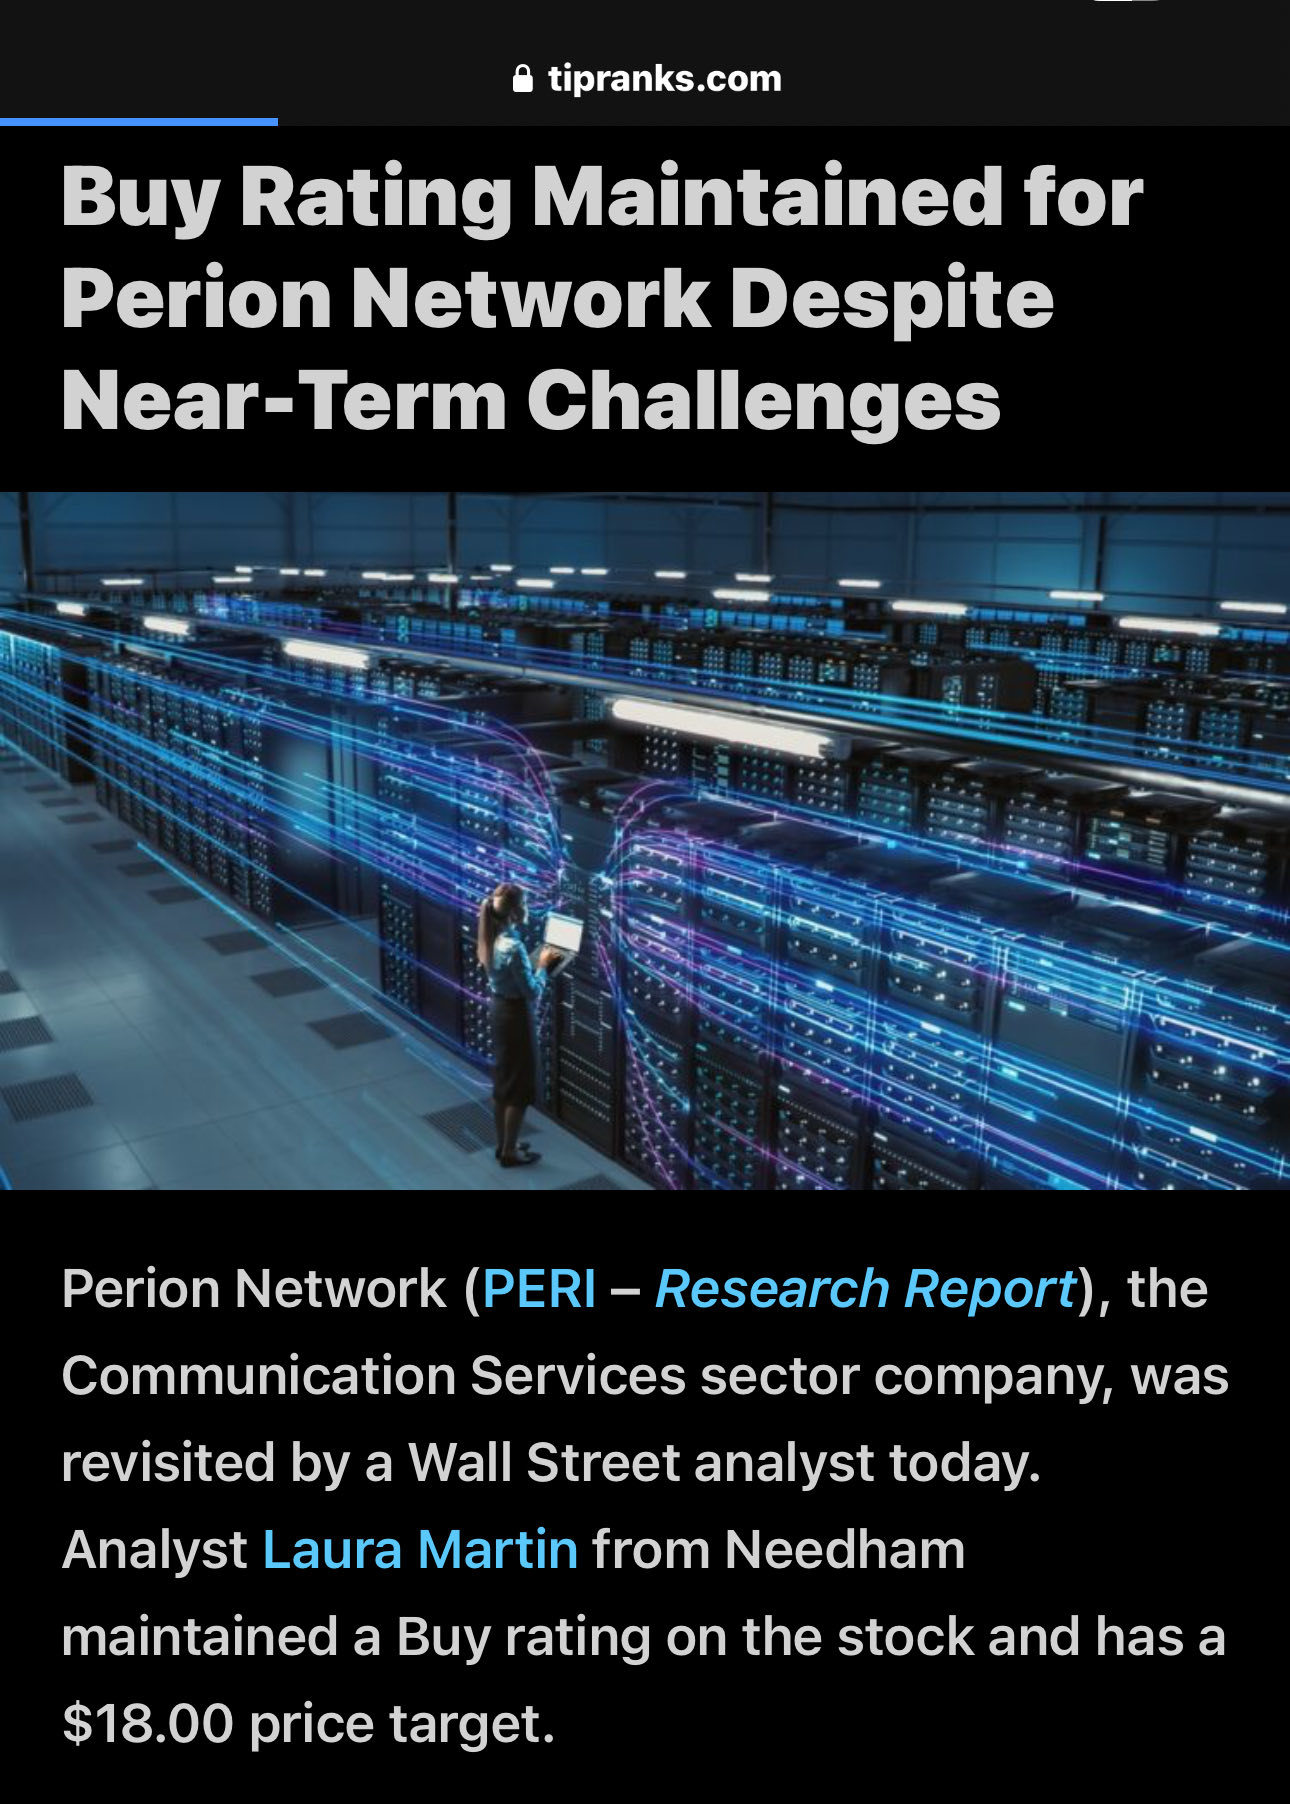 $Perion Network (PERI.US)$